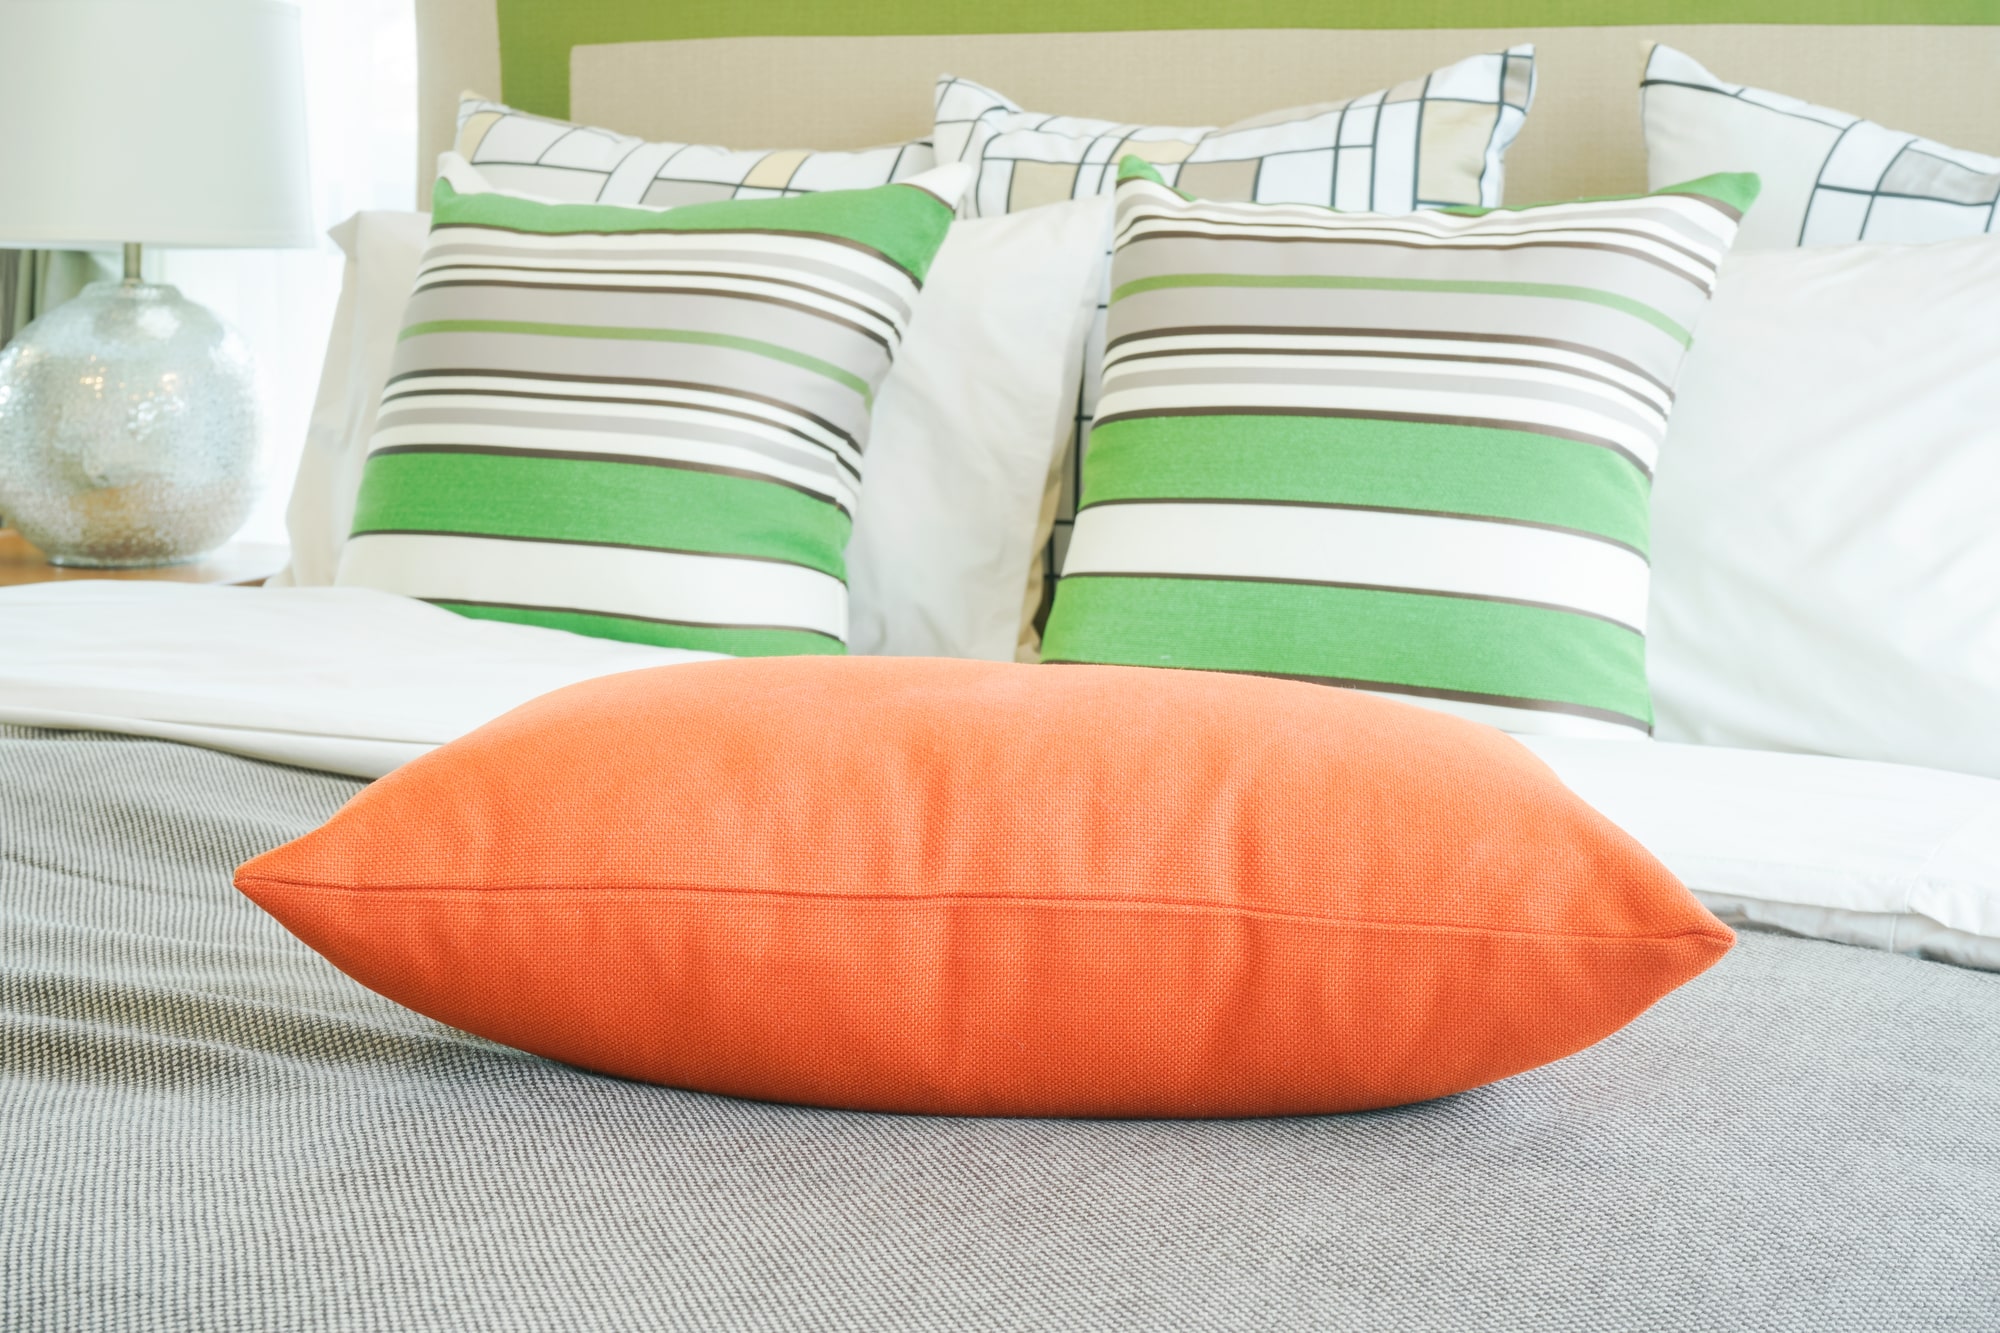 a plump orange pillow